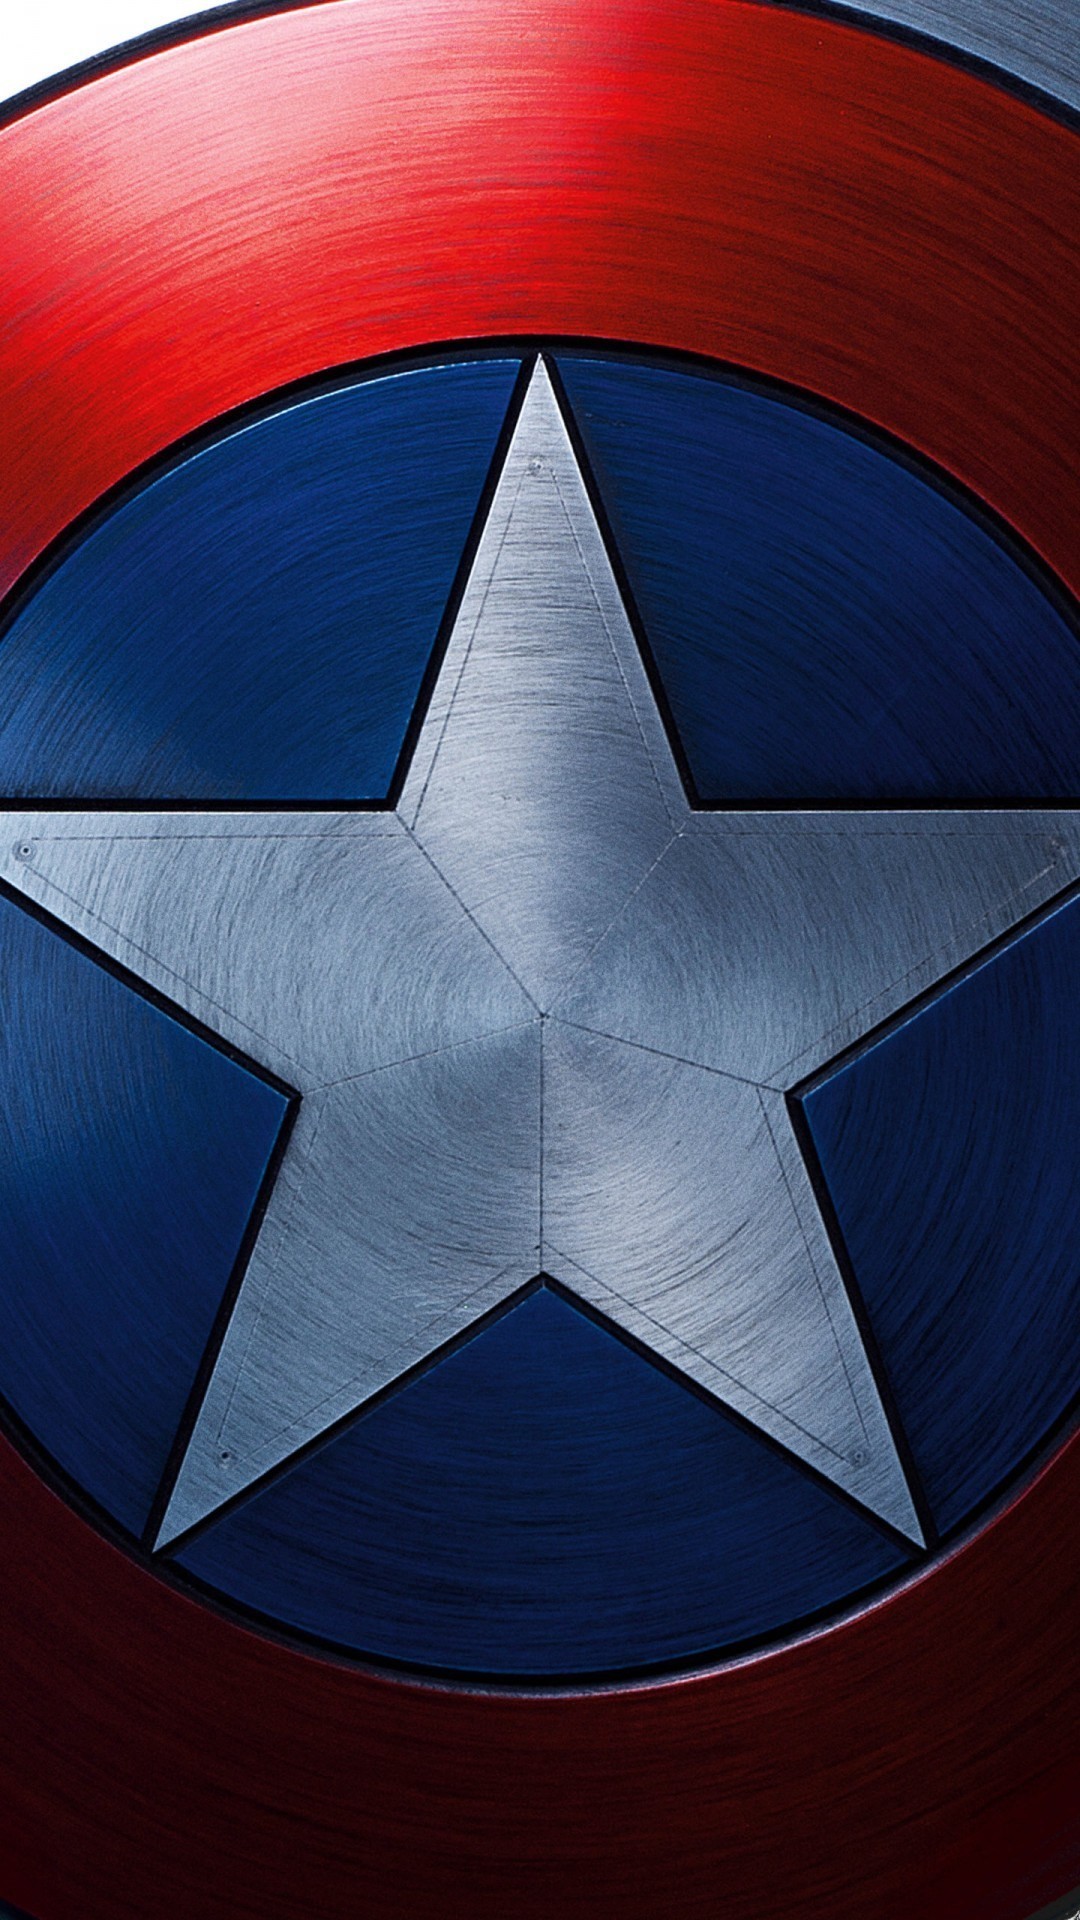 Captain America Civil War Hd Wallpapers For Iphone 7